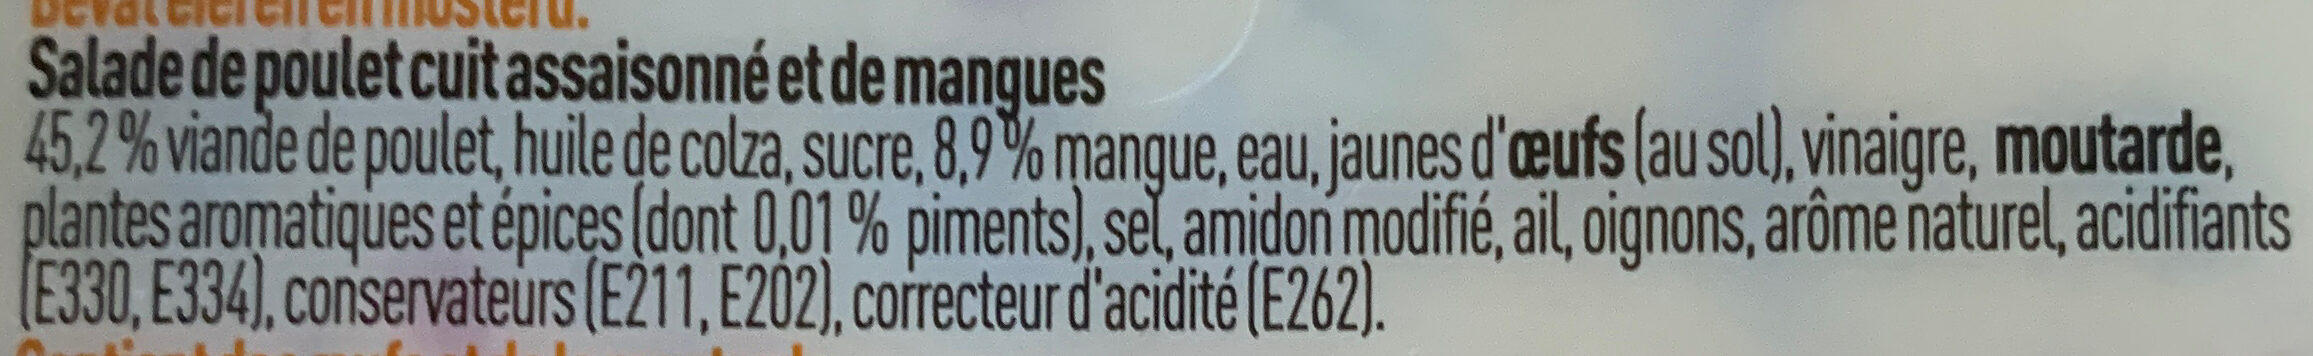 Poulet-mangue - Ingredienser - fr